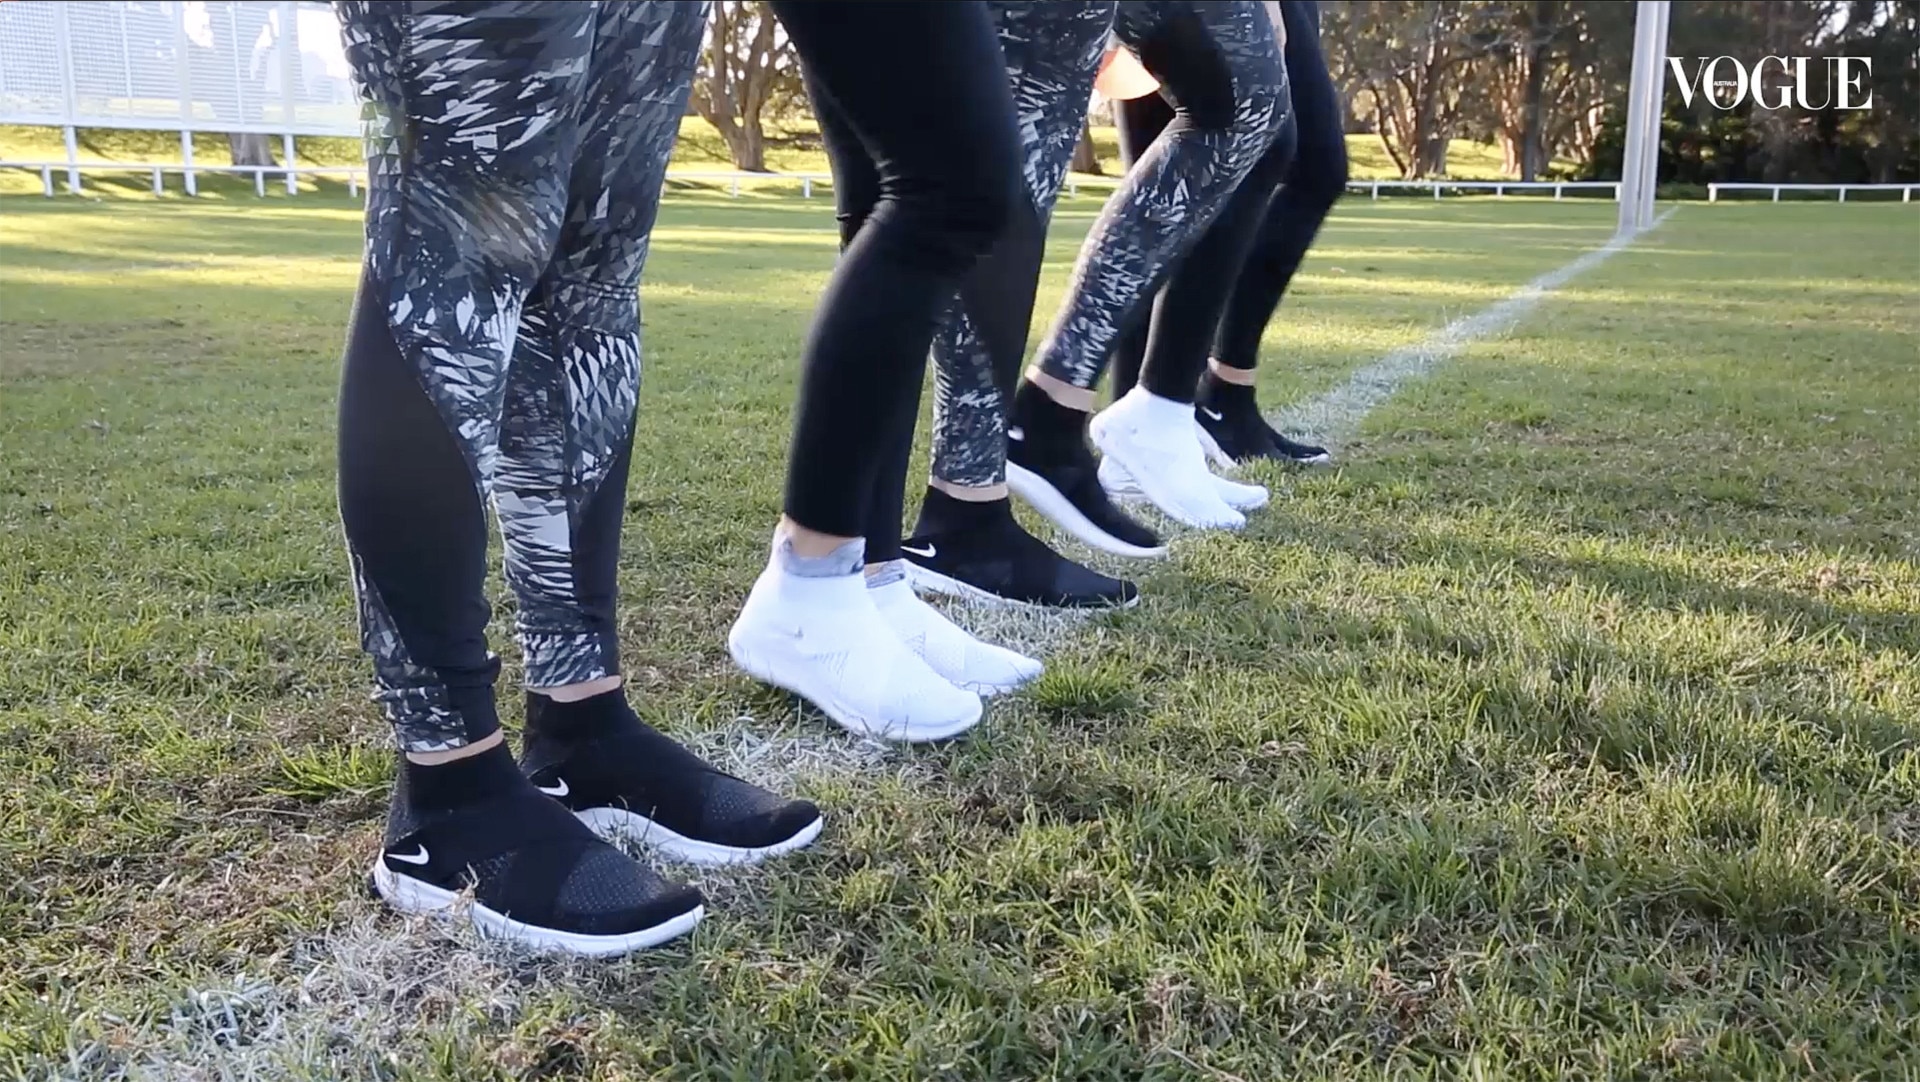 Team Vogue road tests the Nike Free Run Flyknit 2017 Australia